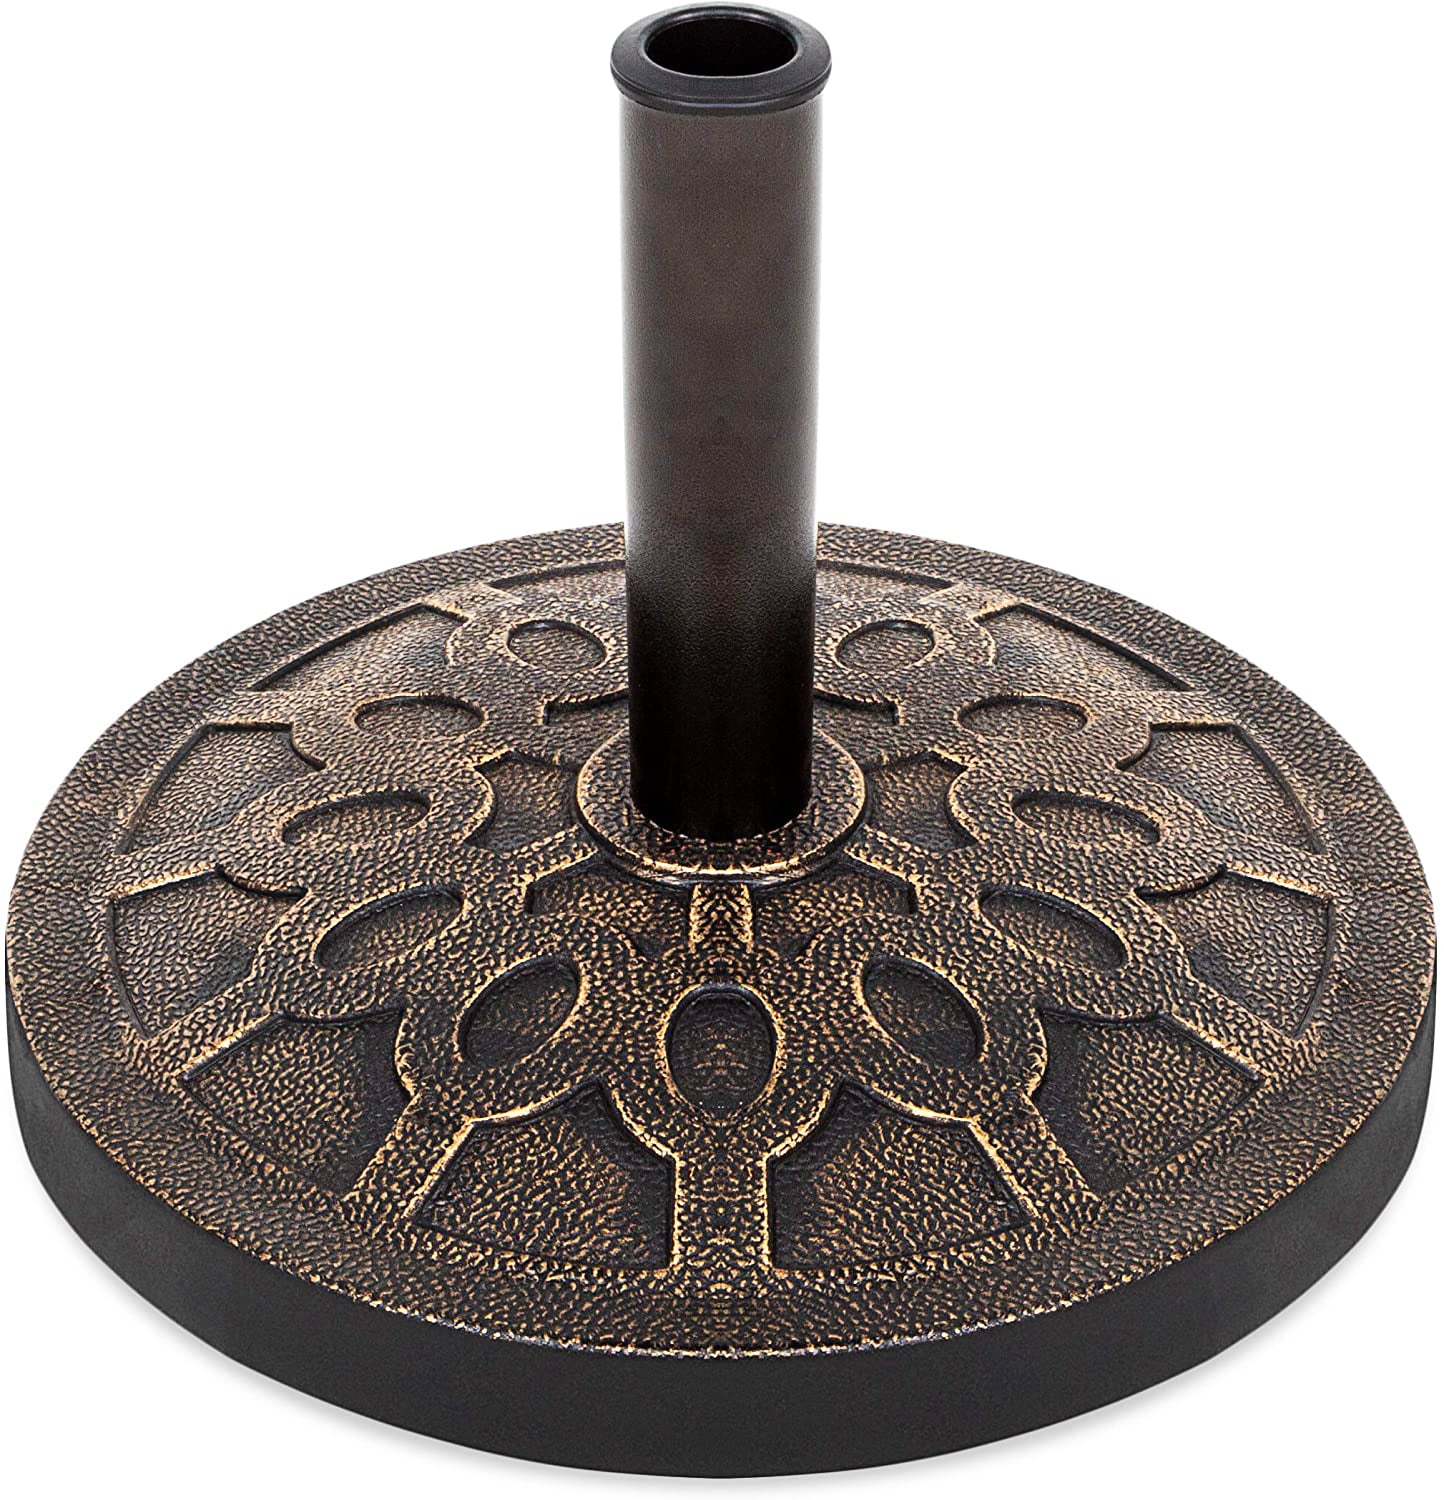 27.5 lbs. Circle Weave Round Resin Patio Umbrella Base in Antique Bronze